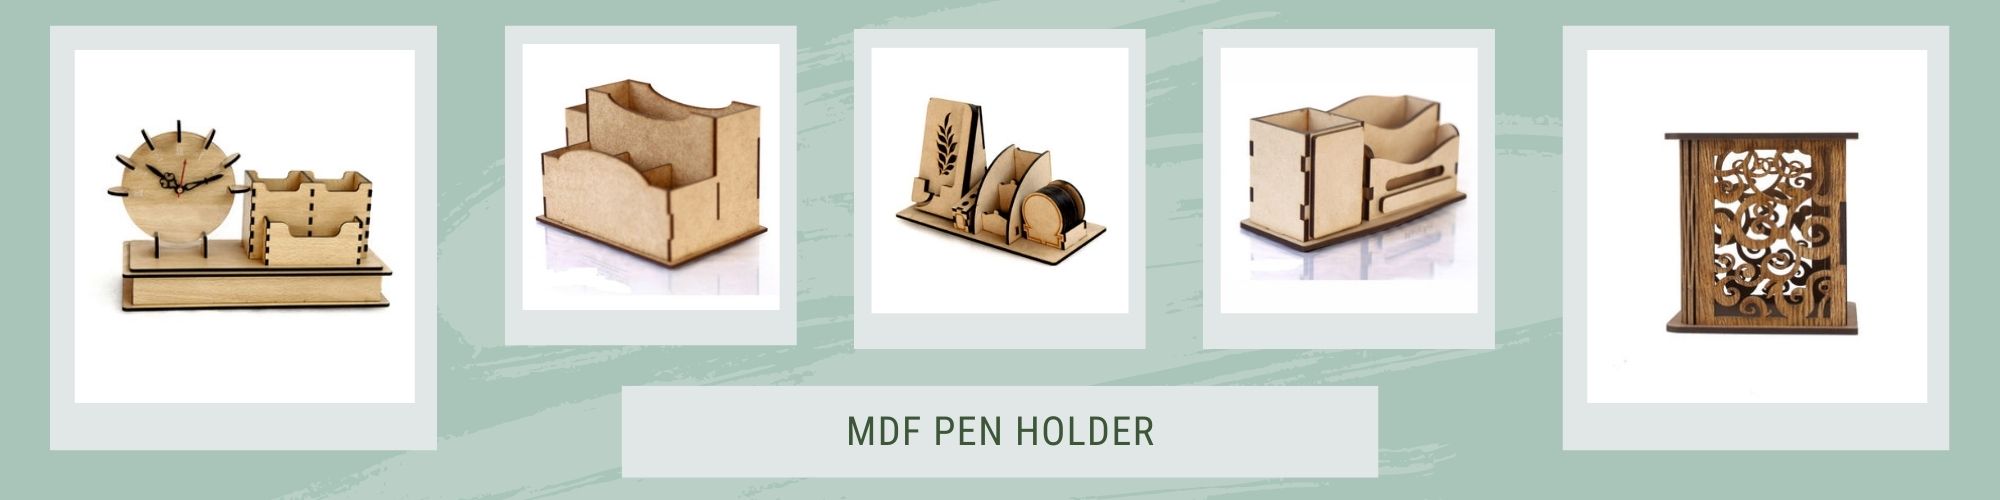 MDF Pen Holder